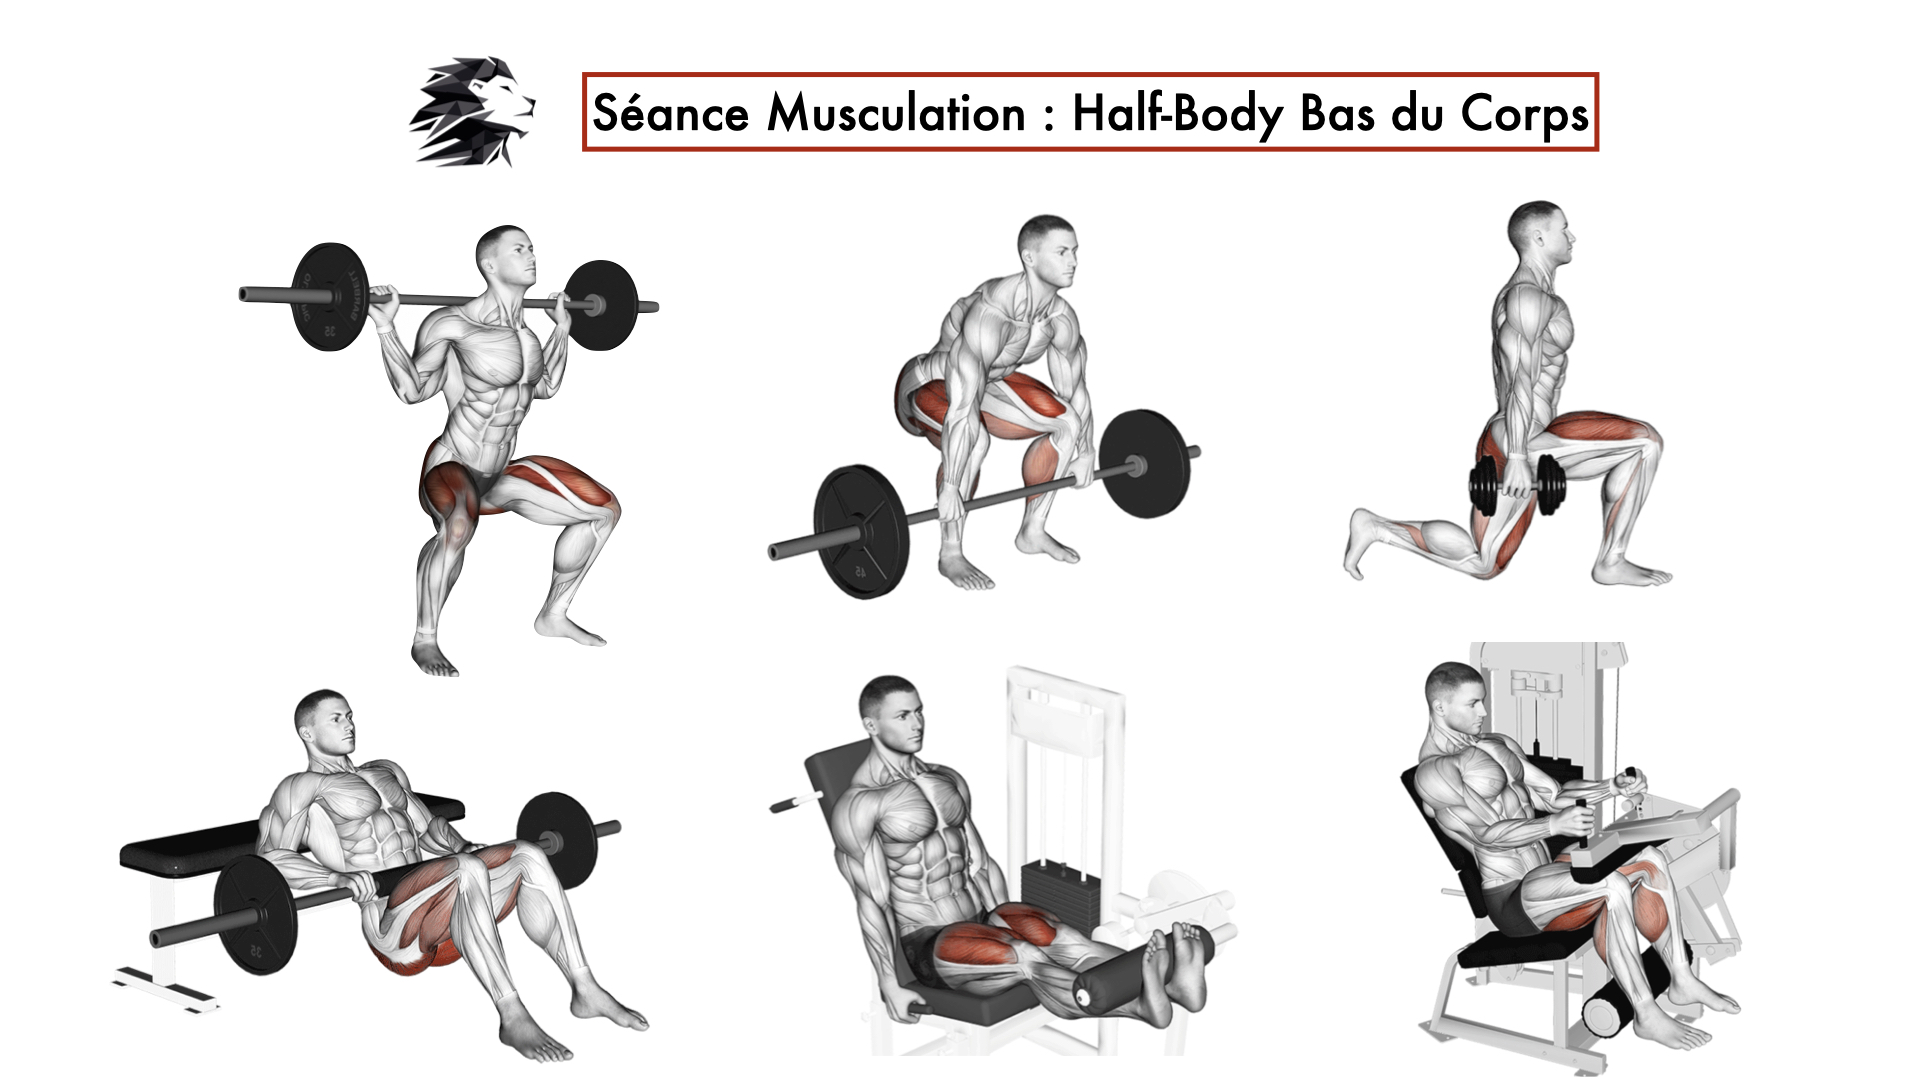 Séance Musculation #8 - Half-Body Bas du Corps